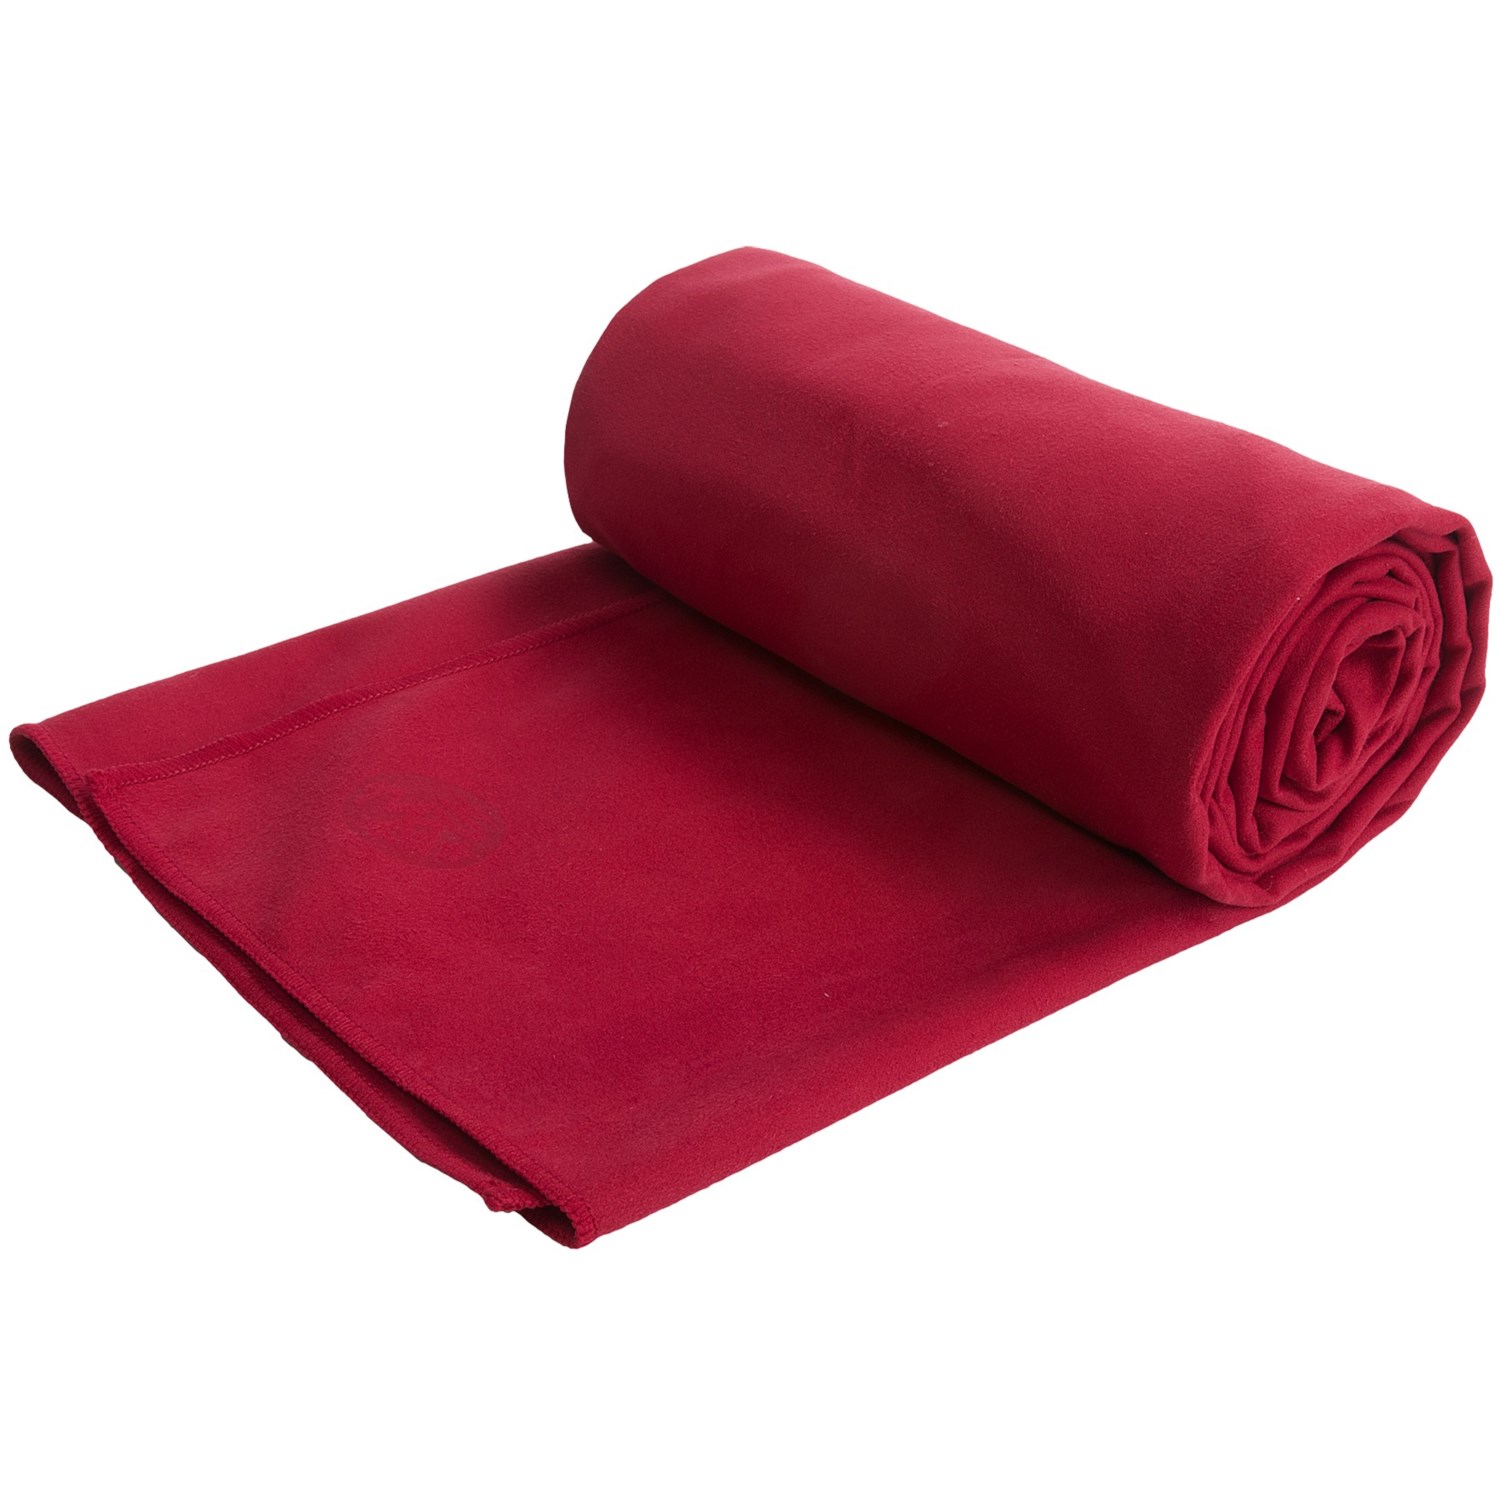 Manduka eQua Plus Yoga Towel - Standard - Save 25%